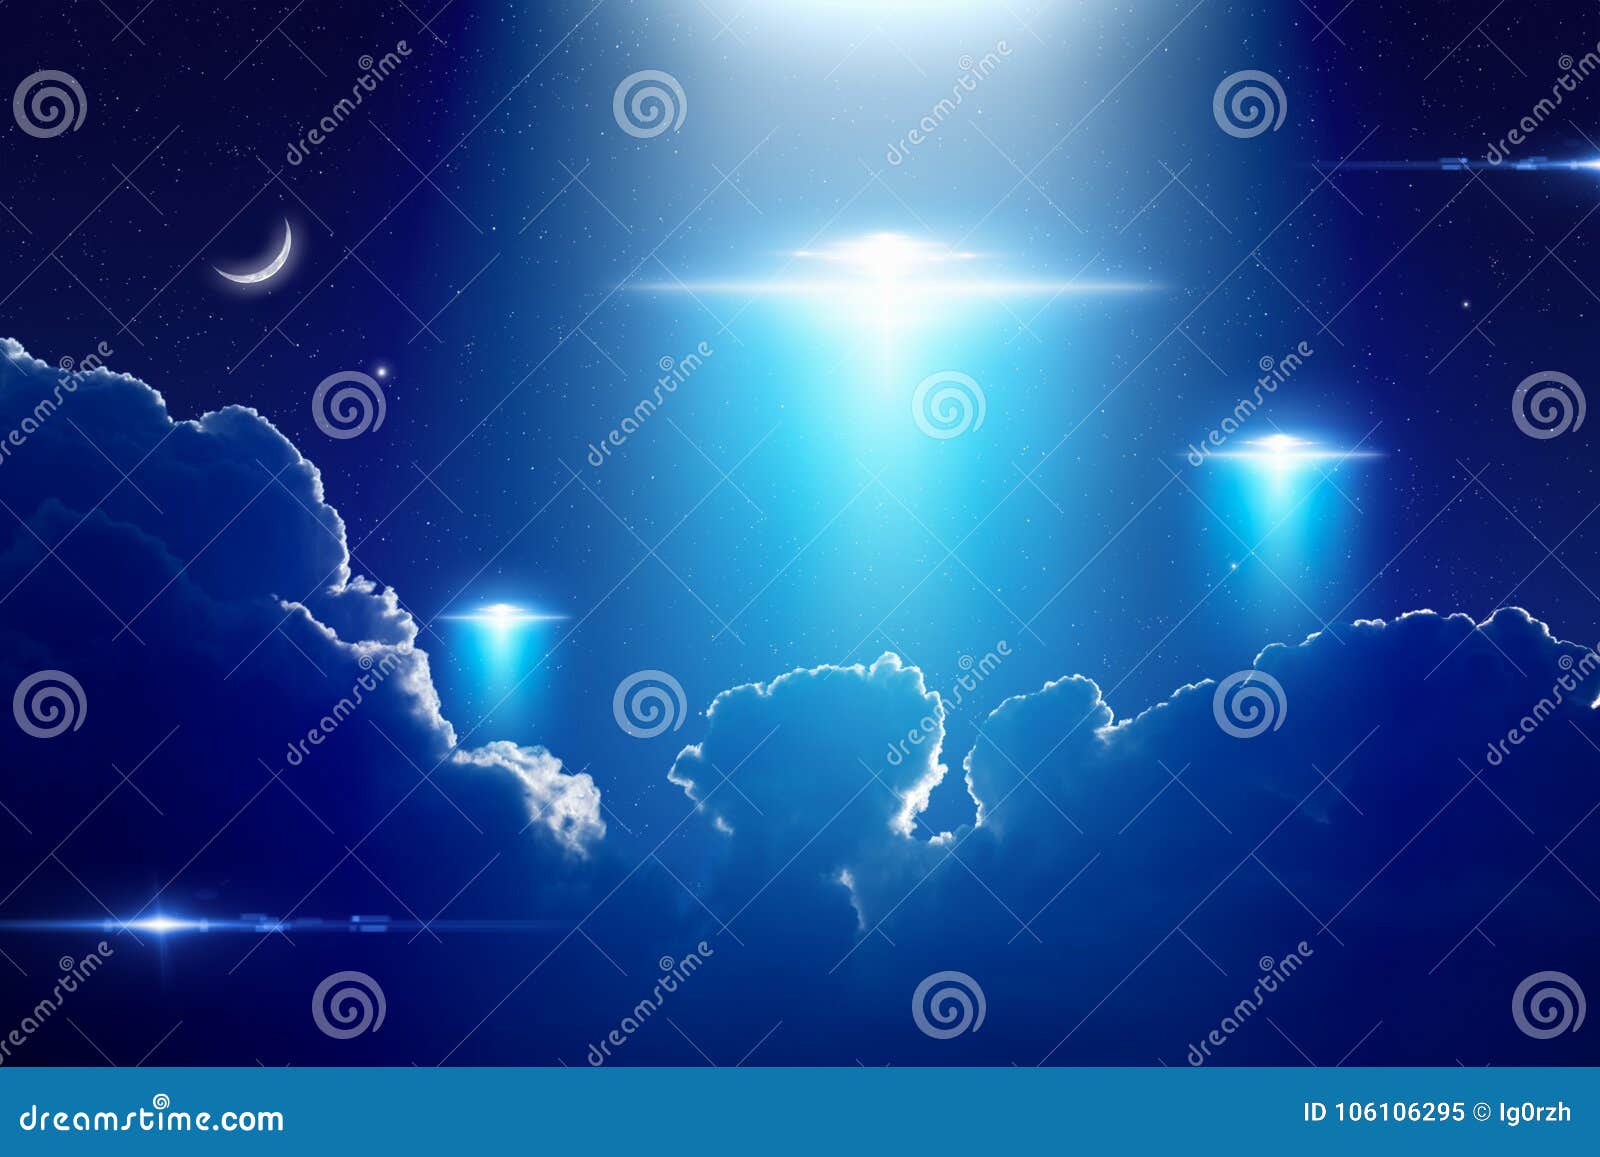 extraterrestrial aliens spaceships, ufo in dark blue starry sky